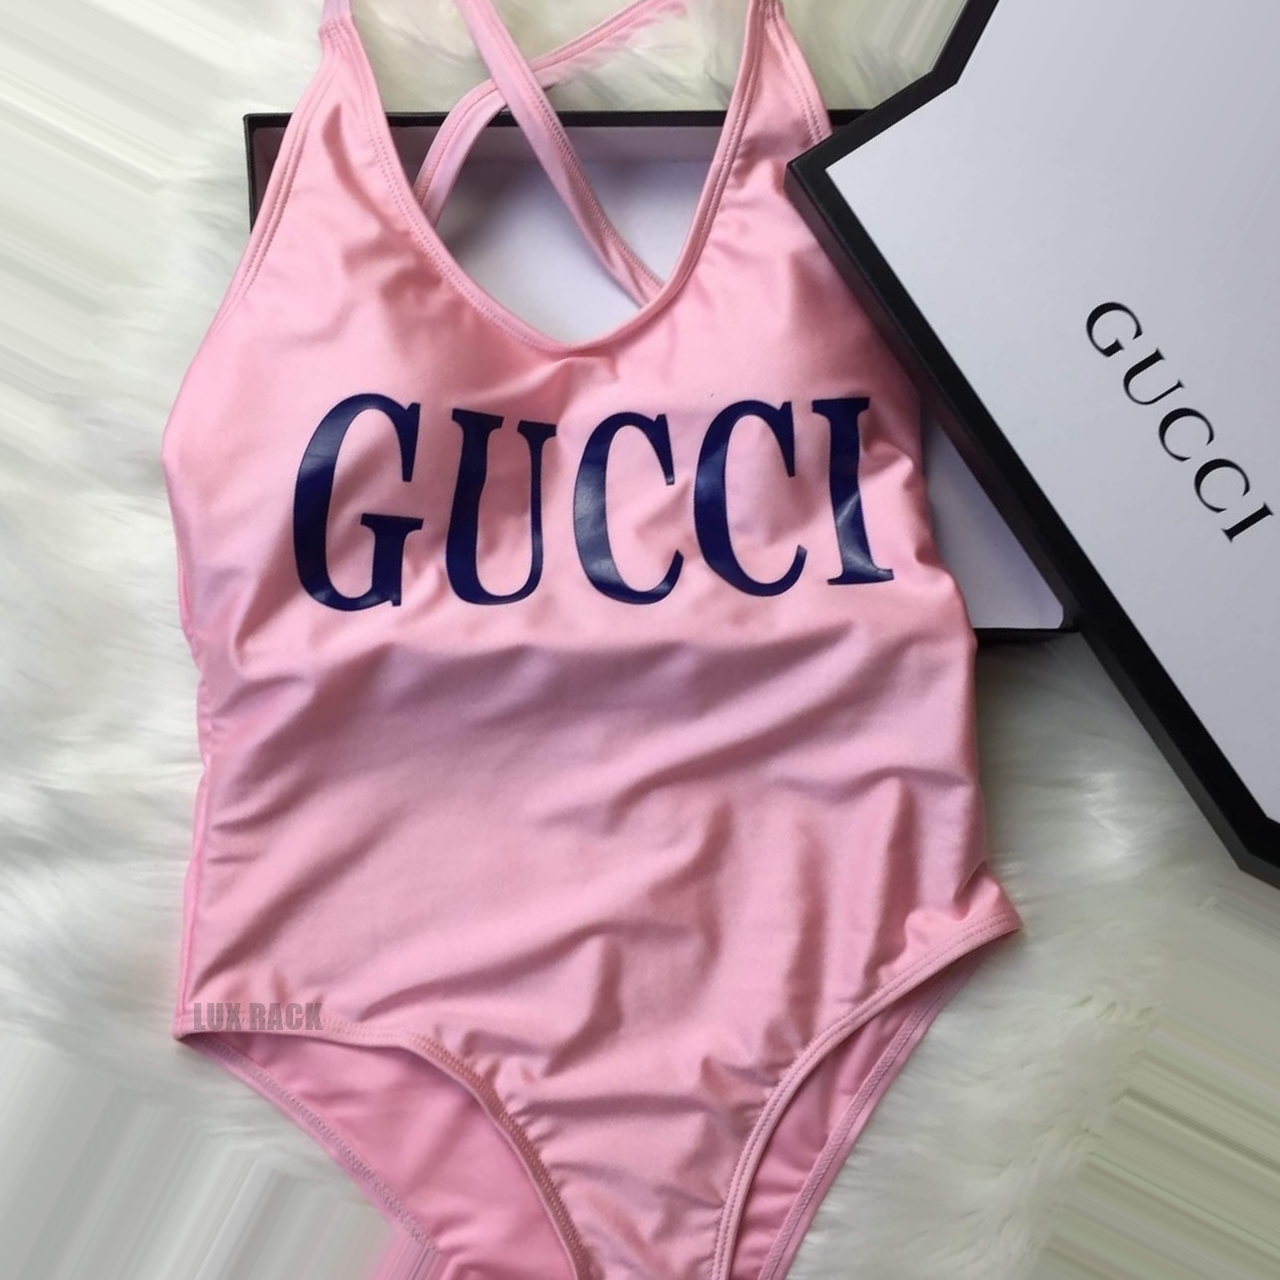 gucci pink bathing suit